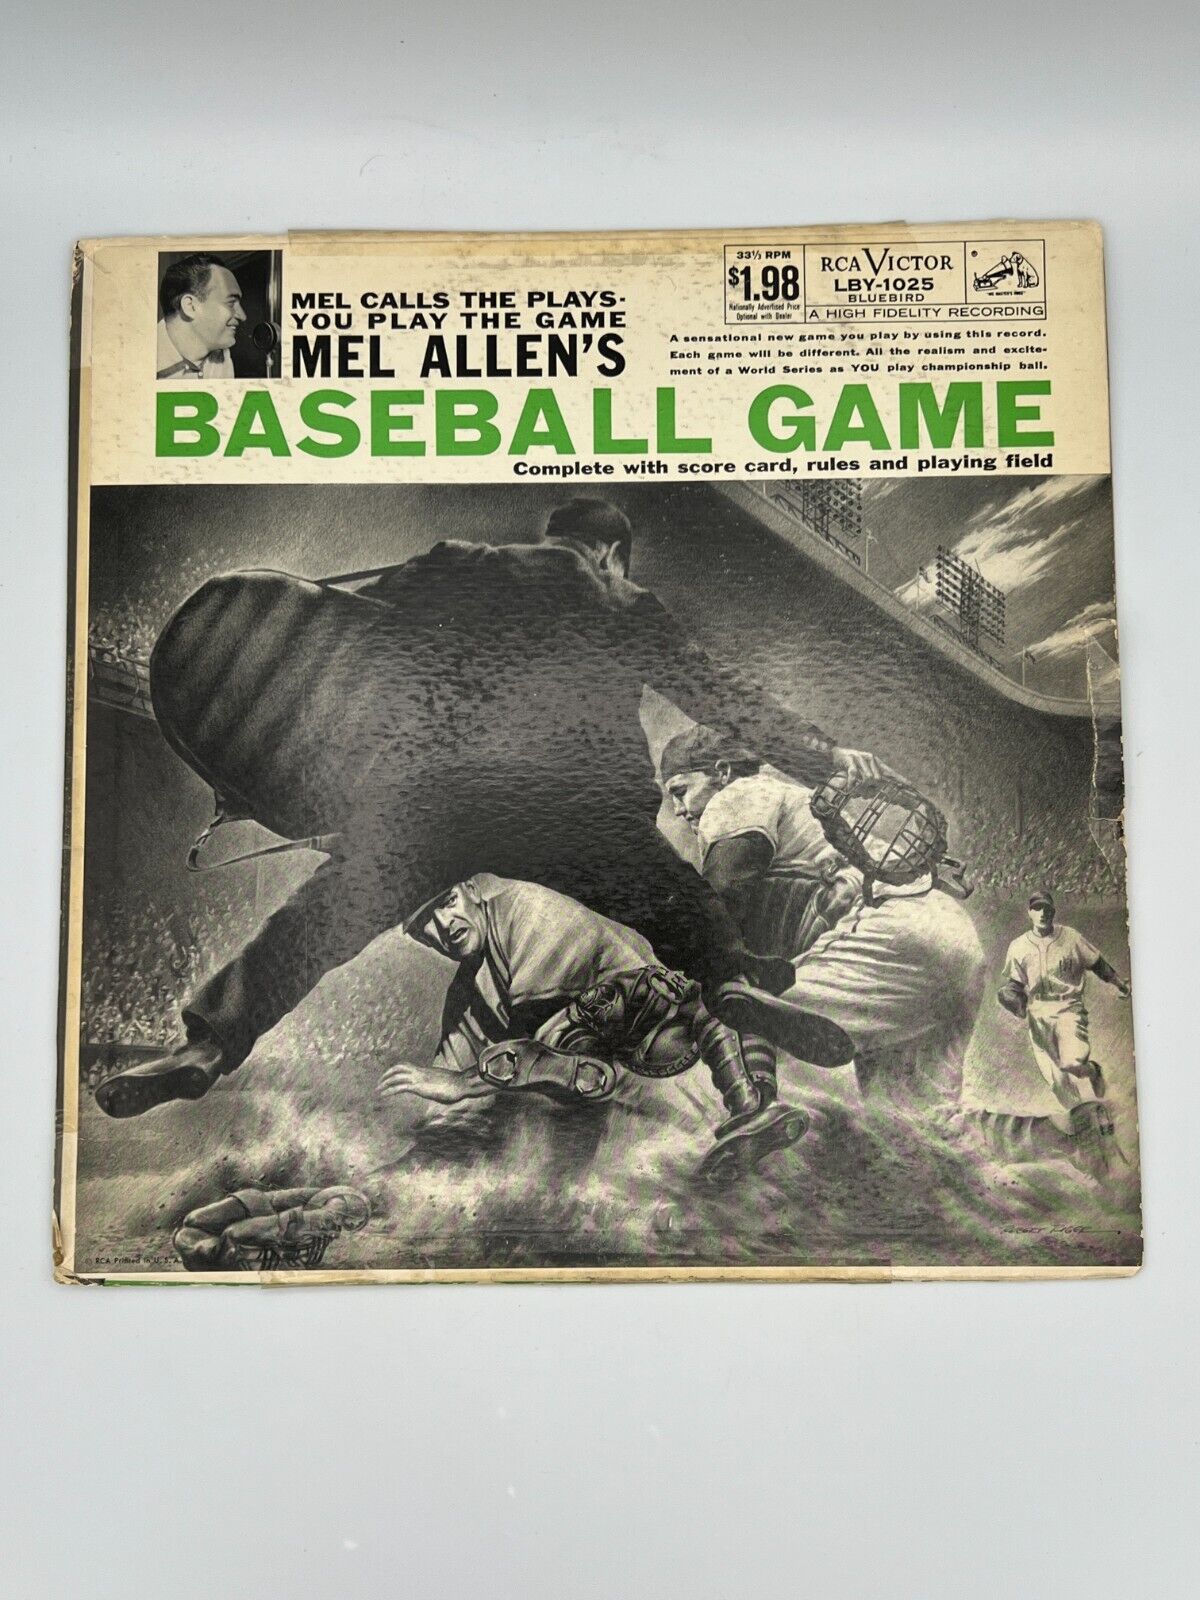 Vintage RCA Victor LBY-1025 Bluebird Mel Allen Baseball Game Record